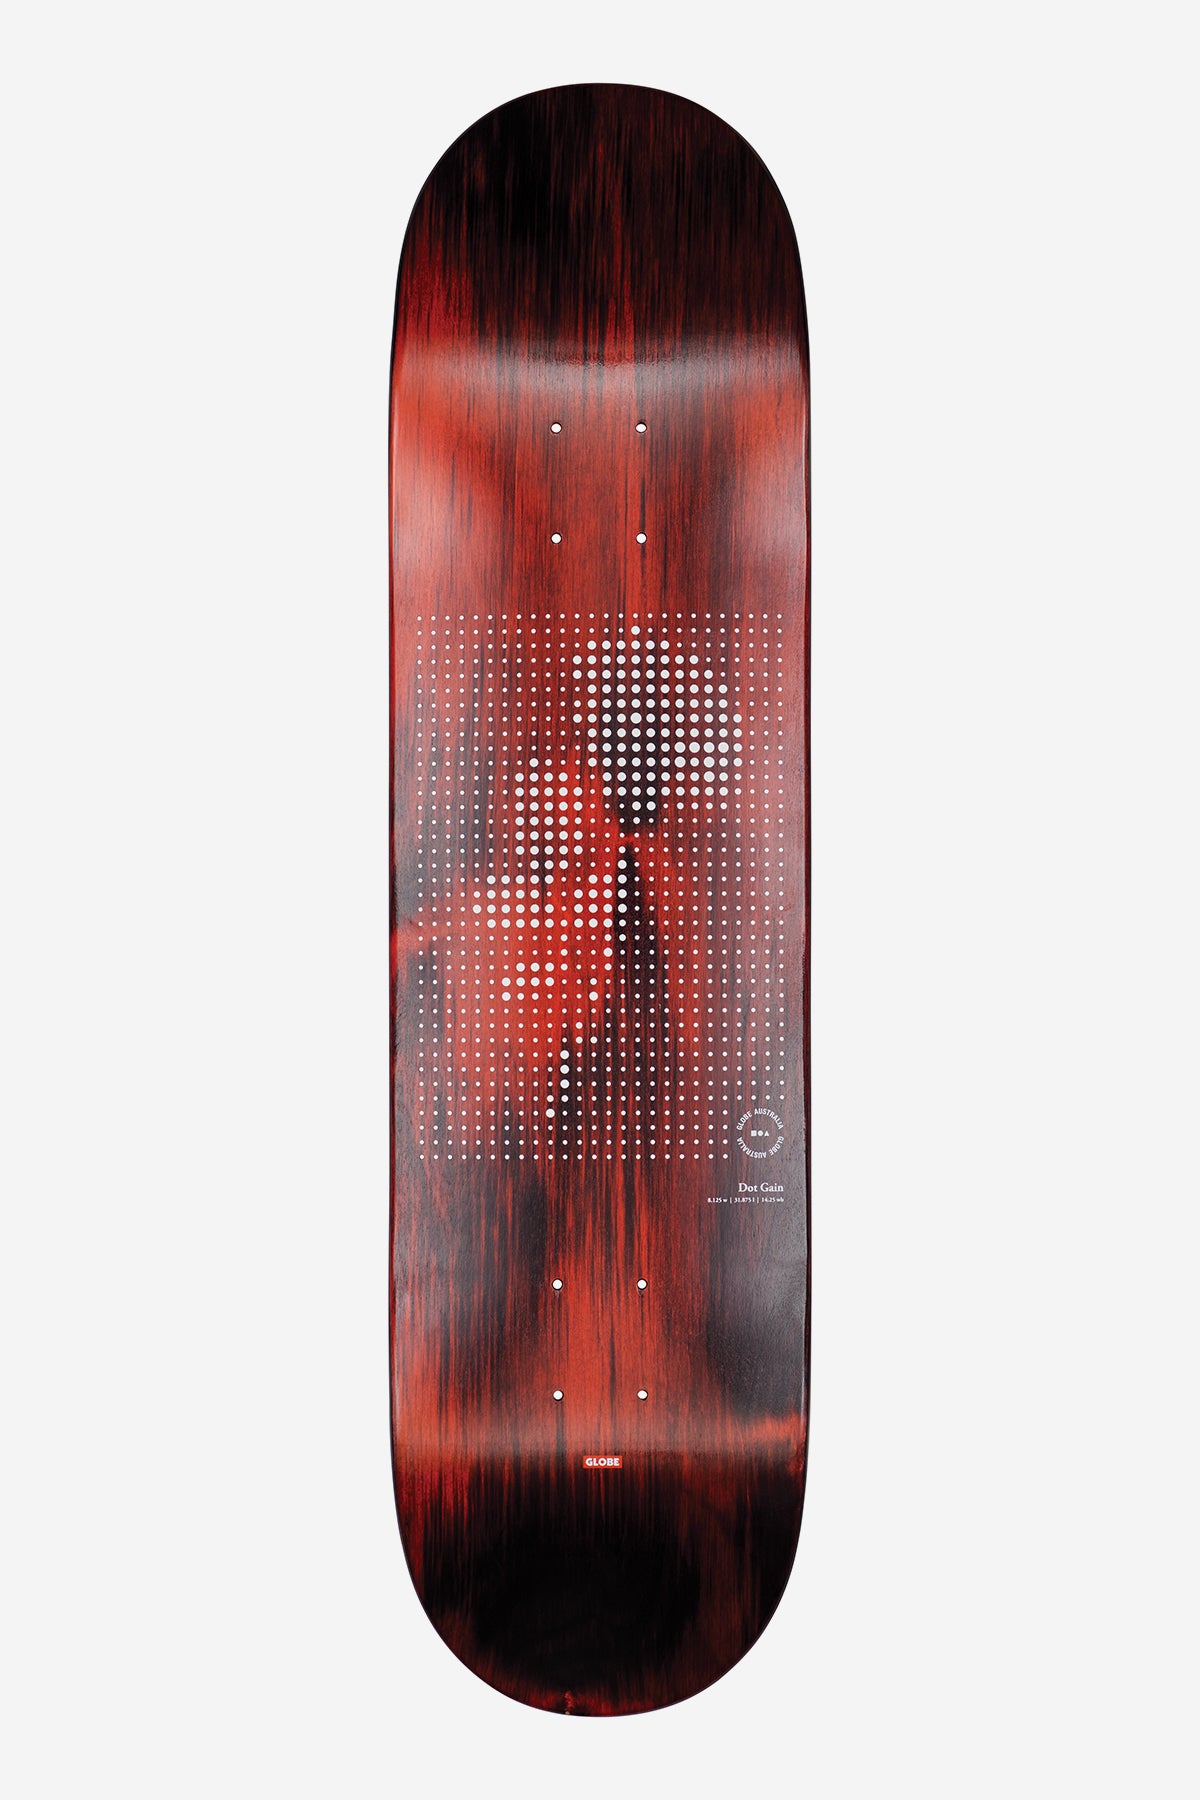 g2 dot gain rose 8.125" skateboard deck